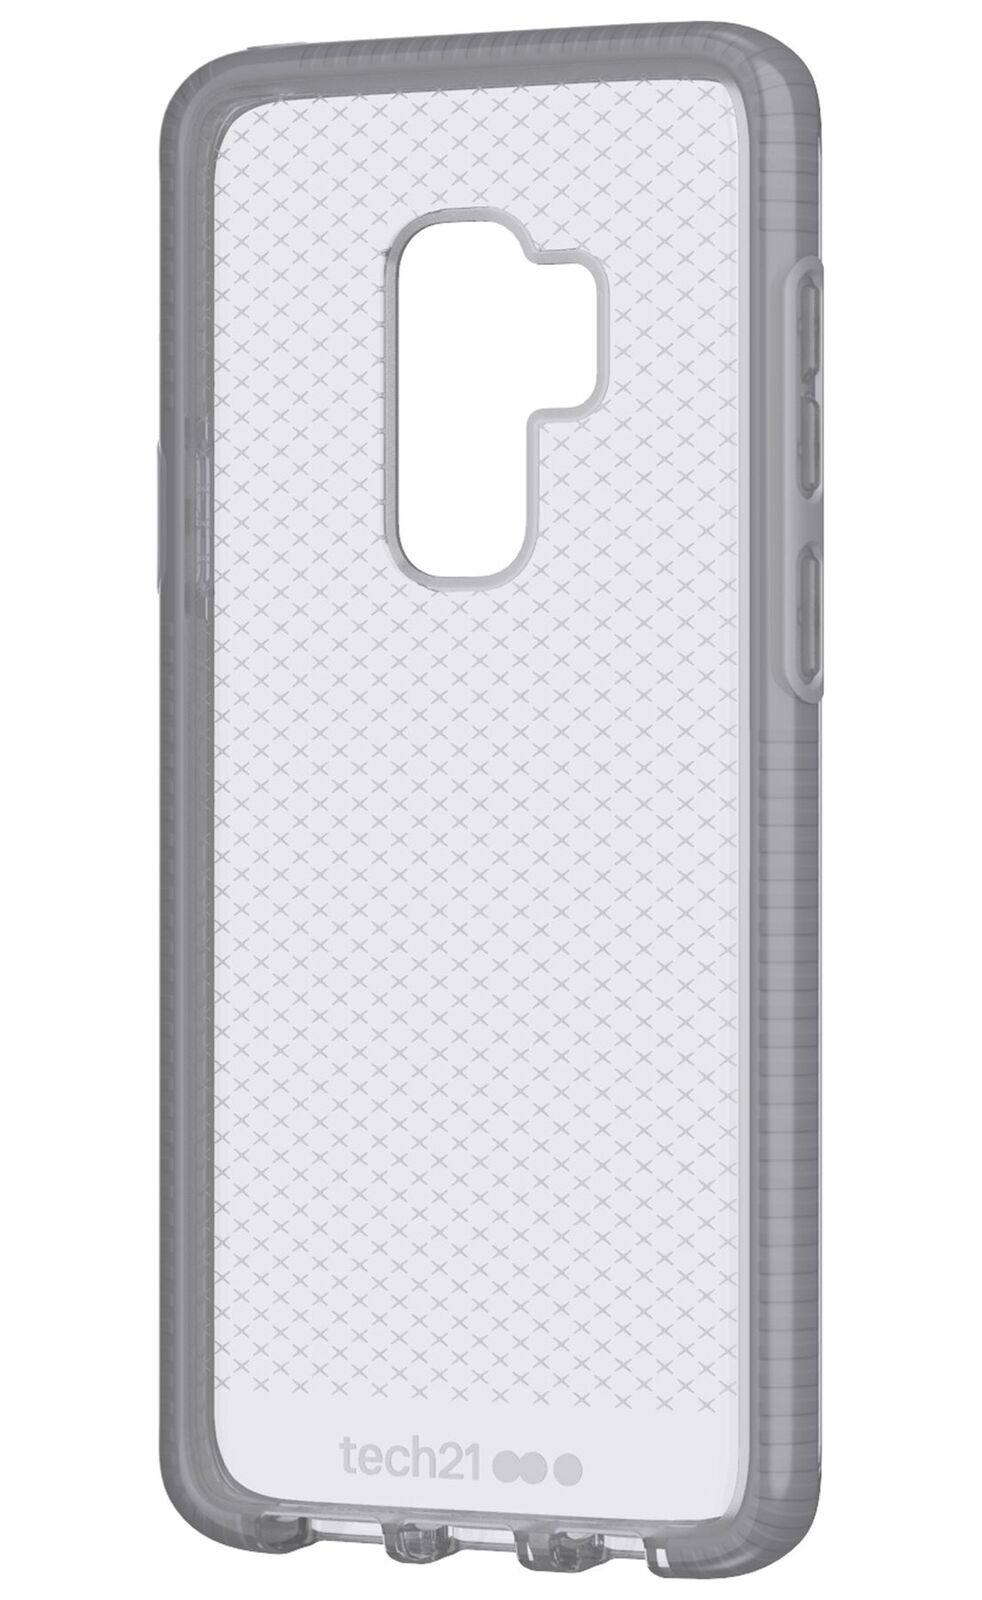 Tech21 Evo Check mobile phone case Cover Grey (T21-5837)